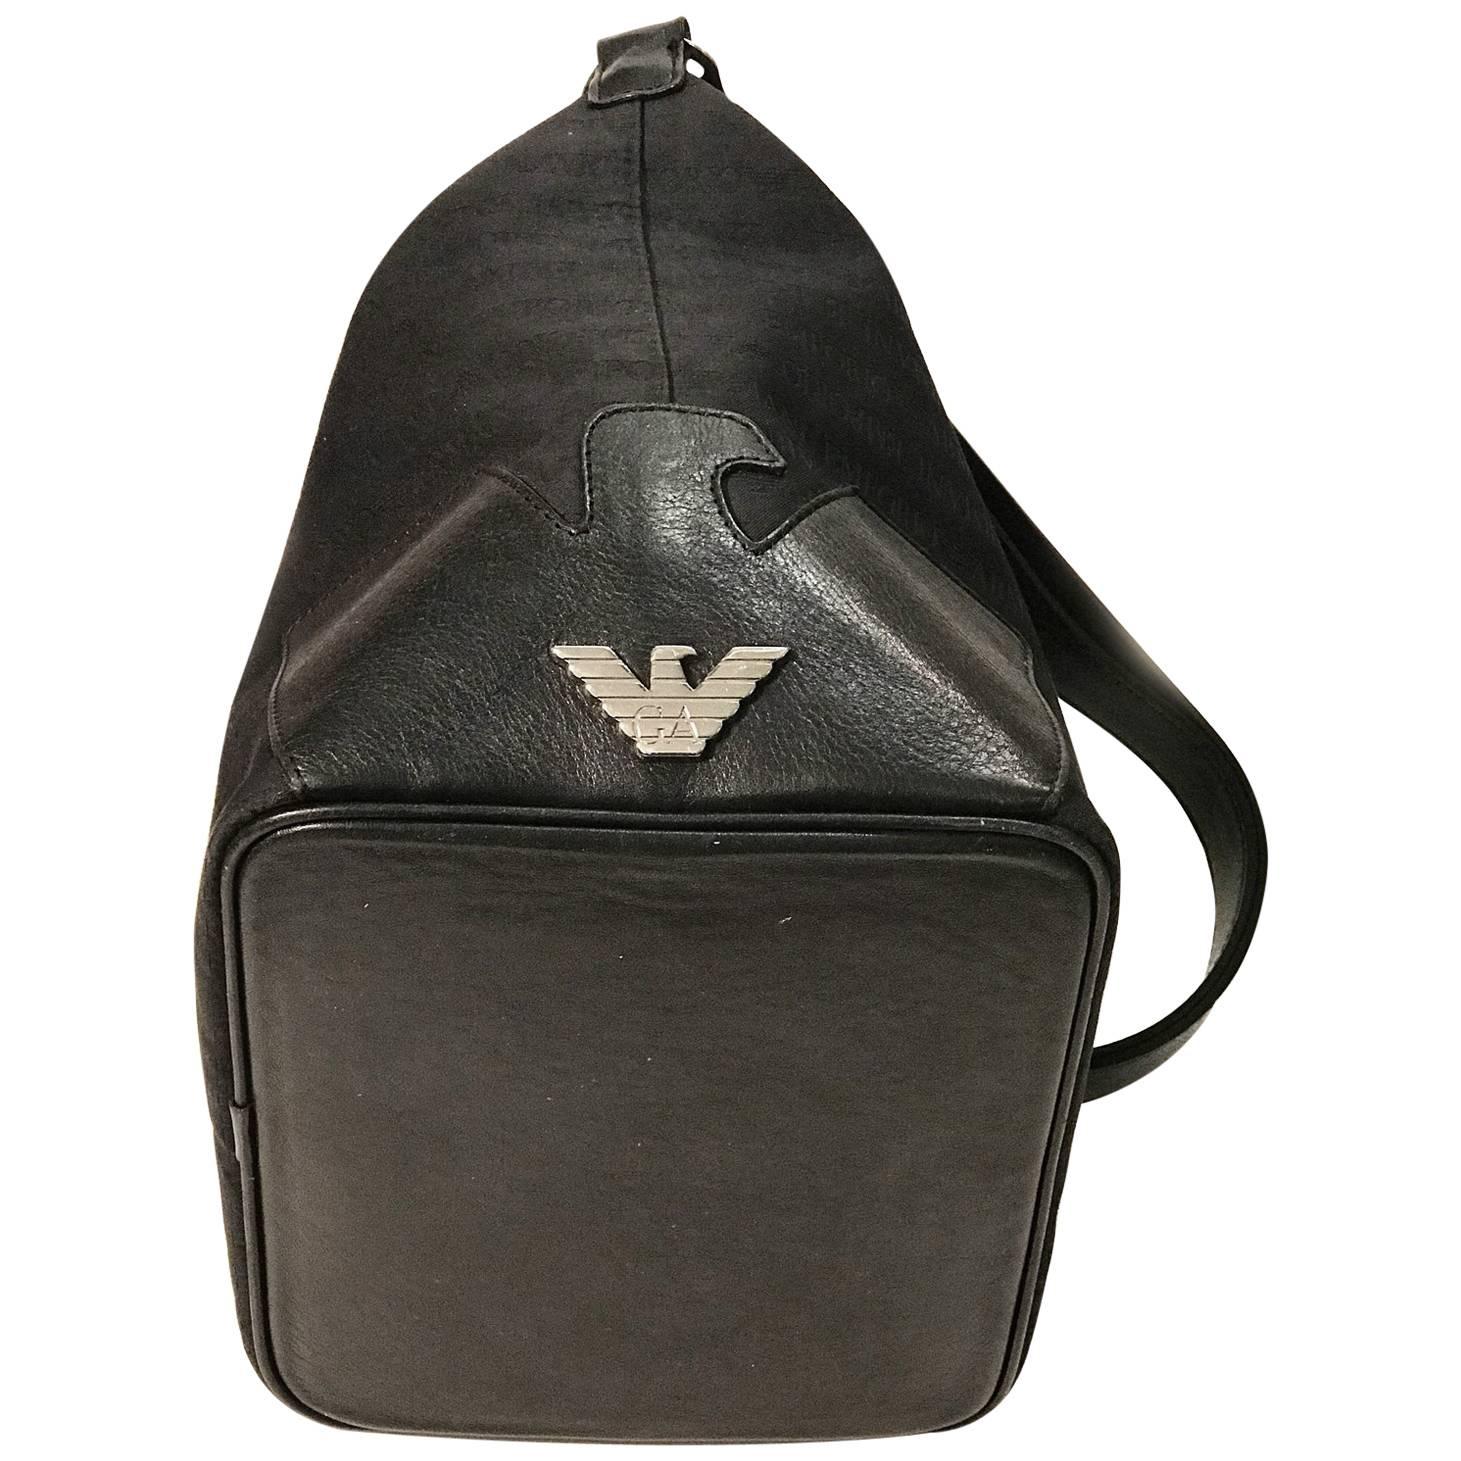 Emporio Armani black canvas with monogram pattern shoulder bag. For Sale